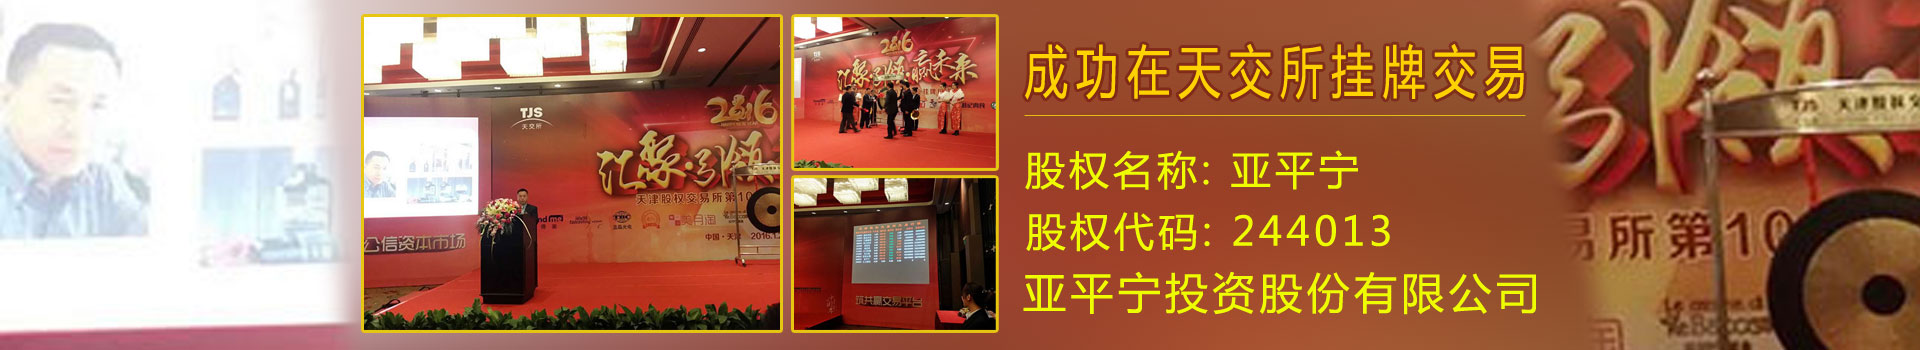 <b>亚平宁酒业董事长王晓峰在公司首日天交所挂牌交易、鸣锣仪式上的感言</b>